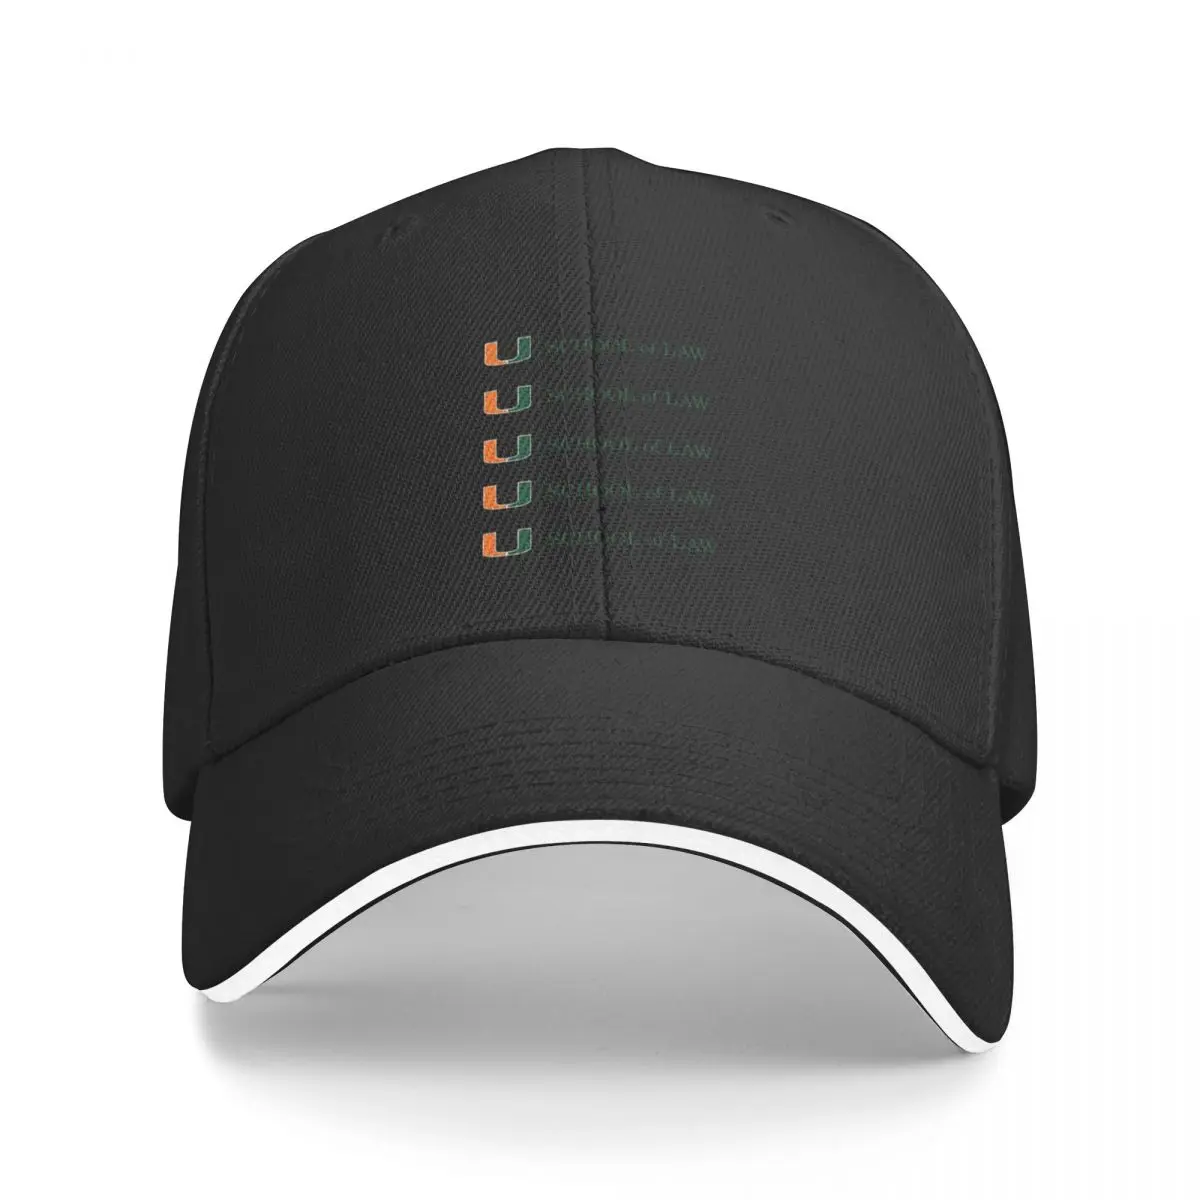 

New university of miami law Baseball Cap Military Tactical Caps Sports Caps funny hat Hat Women Men's